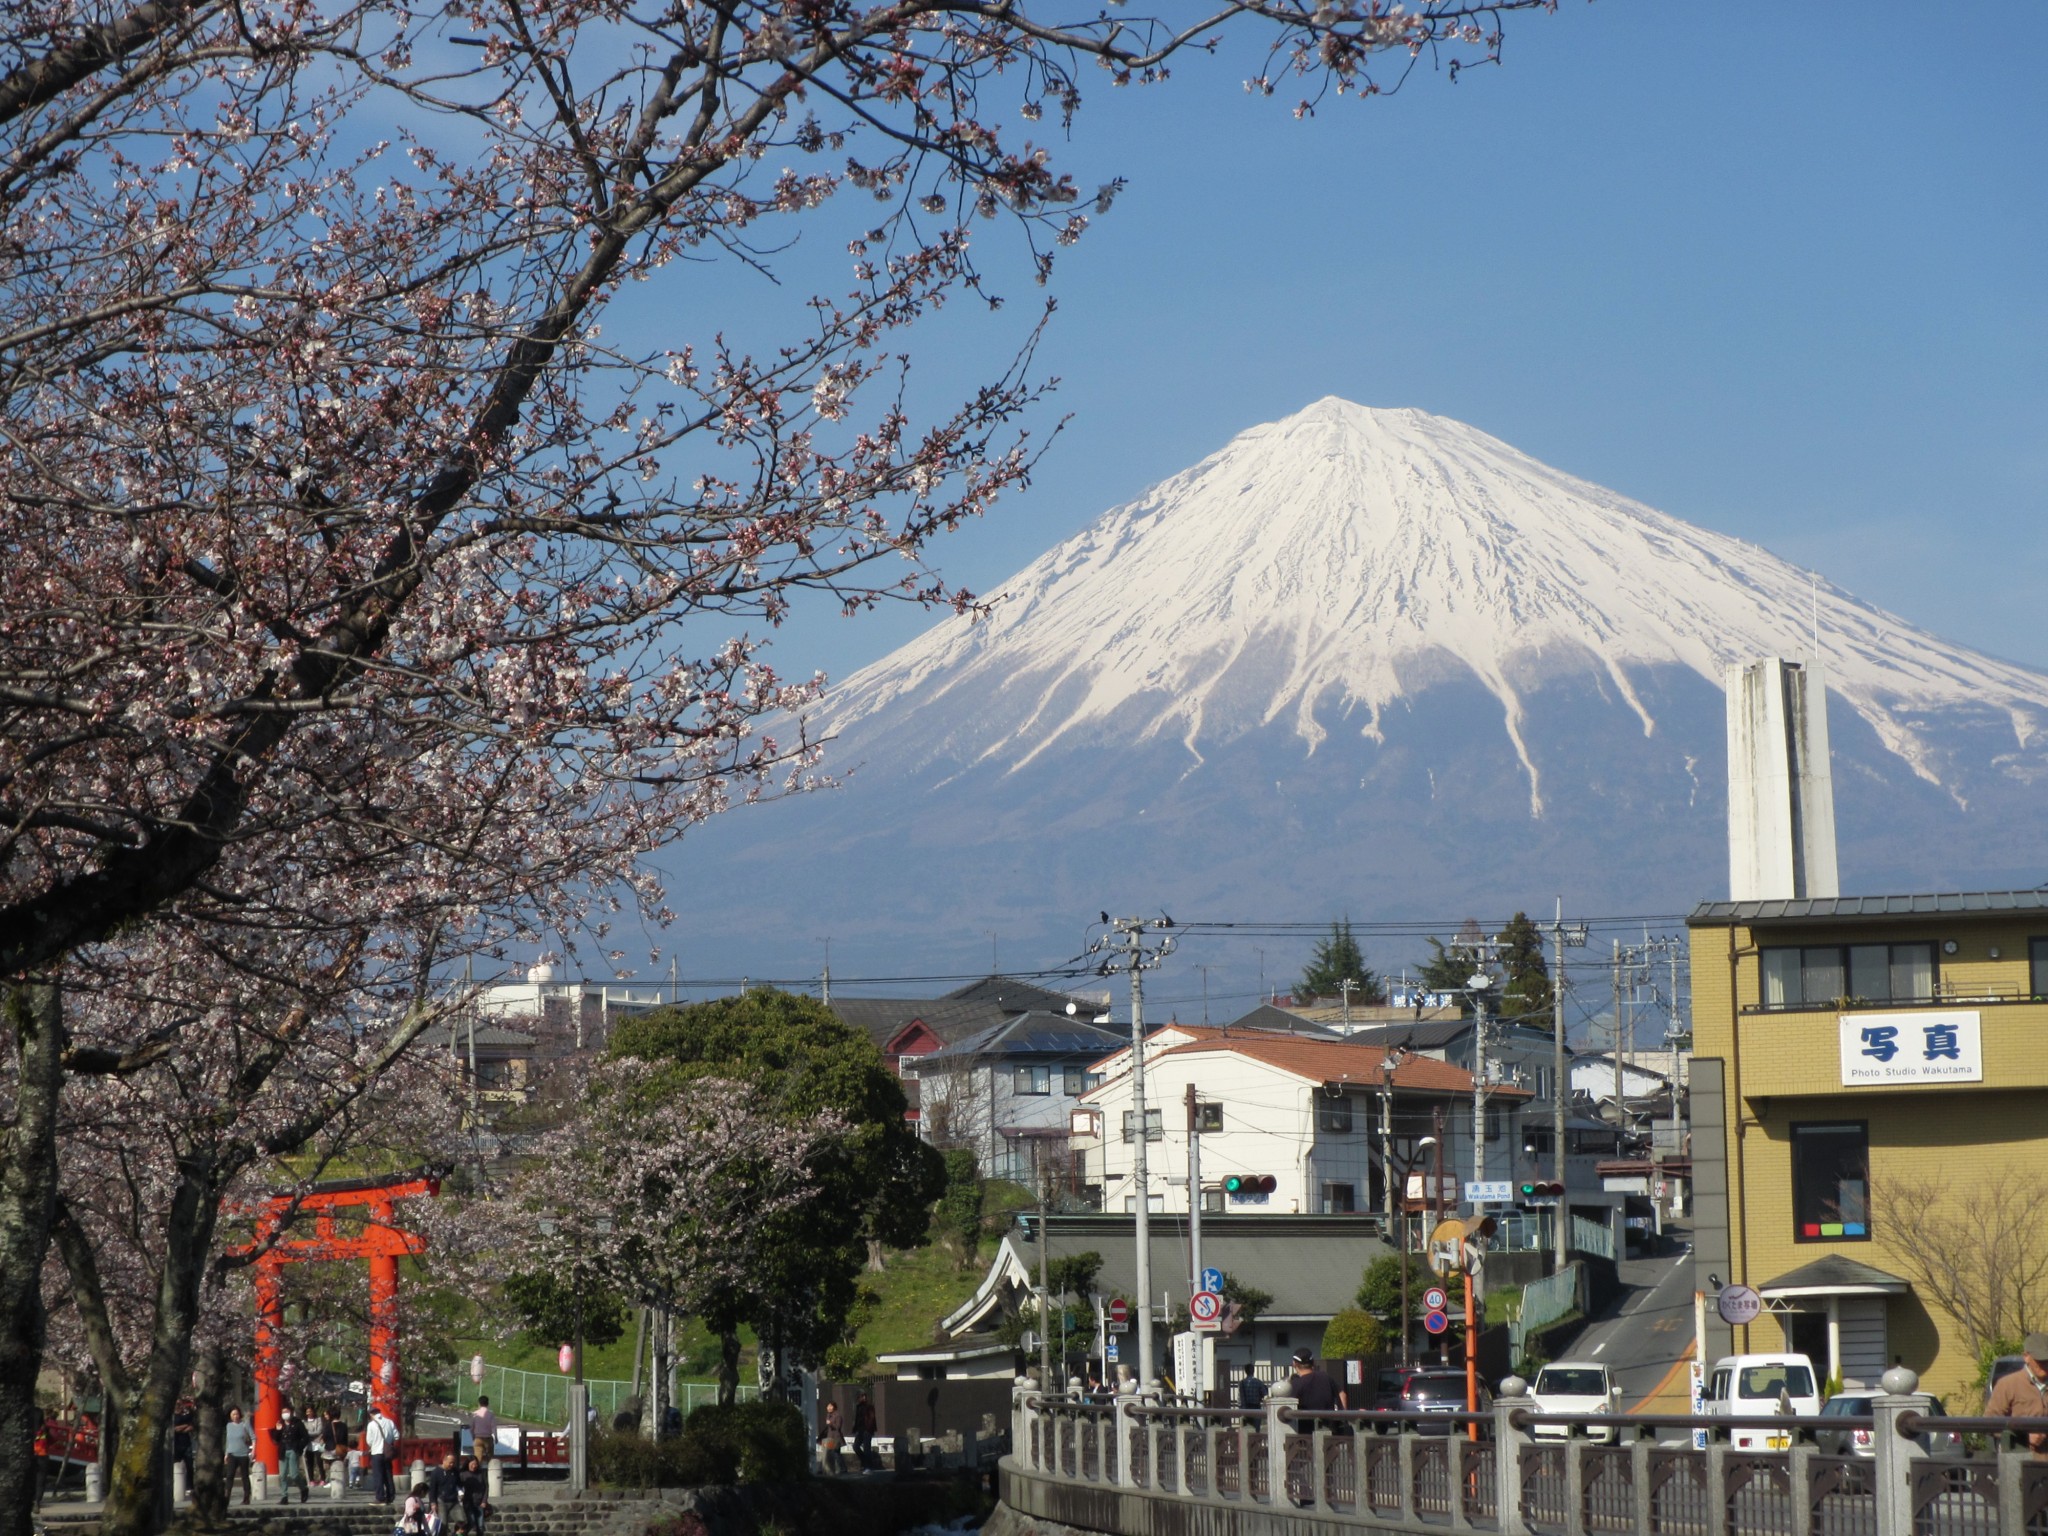 Top 3 Cherry blossom viewing spots in Fujinomiya